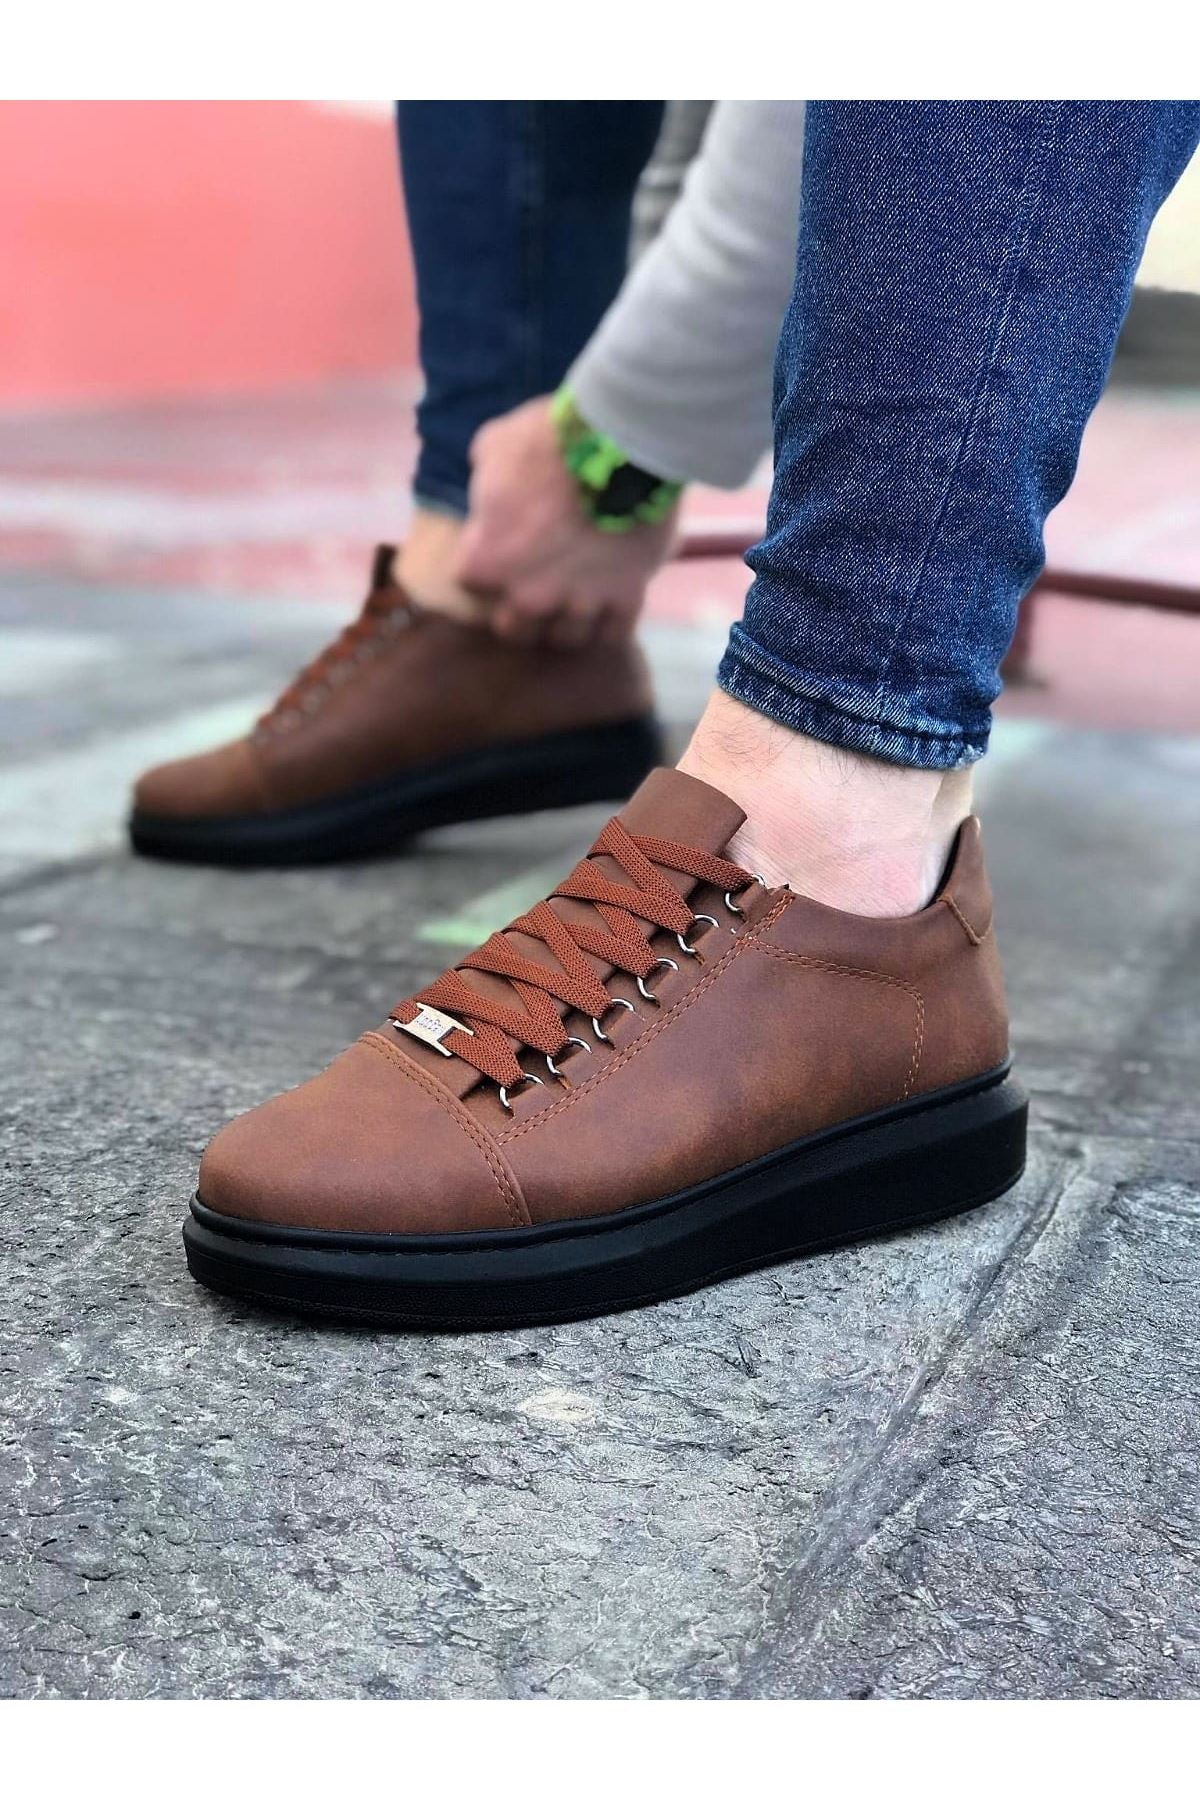 WG08 Tan Coal Flat Men's Casual Shoes - STREETMODE ™